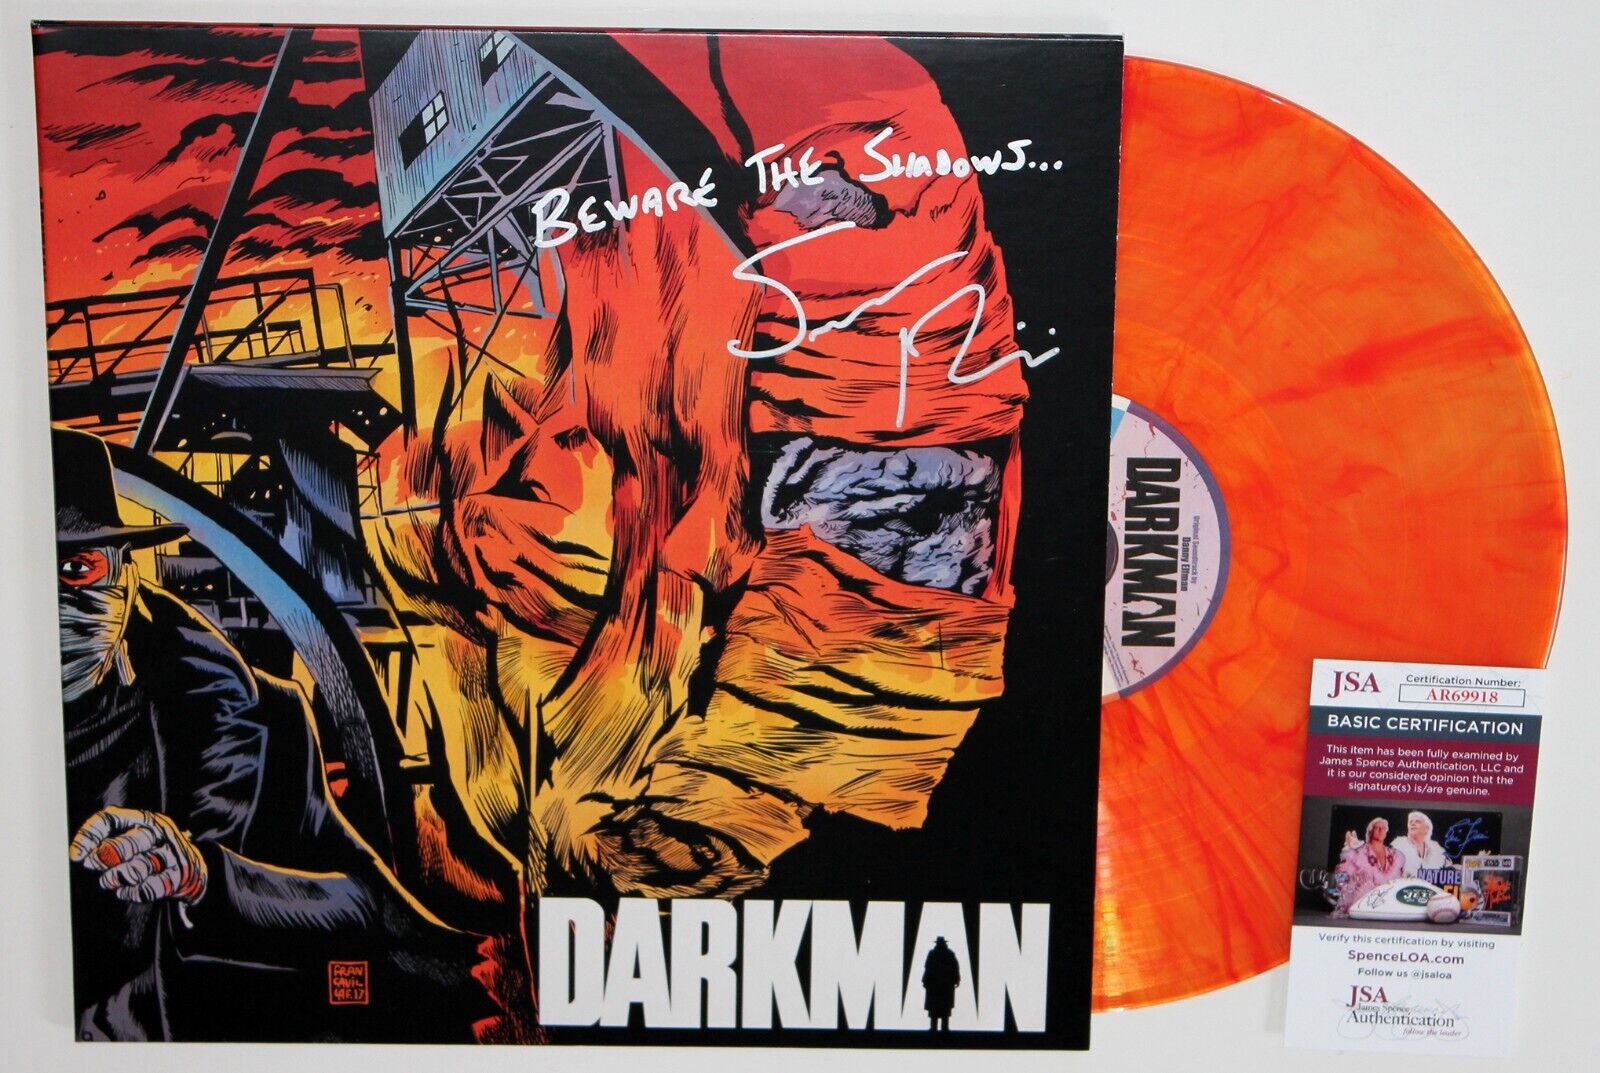 SAM RAIMI SIGNED DARKMAN SOUNDTRACK OST LP VINYL RECORD ALBUM AUTOGRAPH +JSA COA